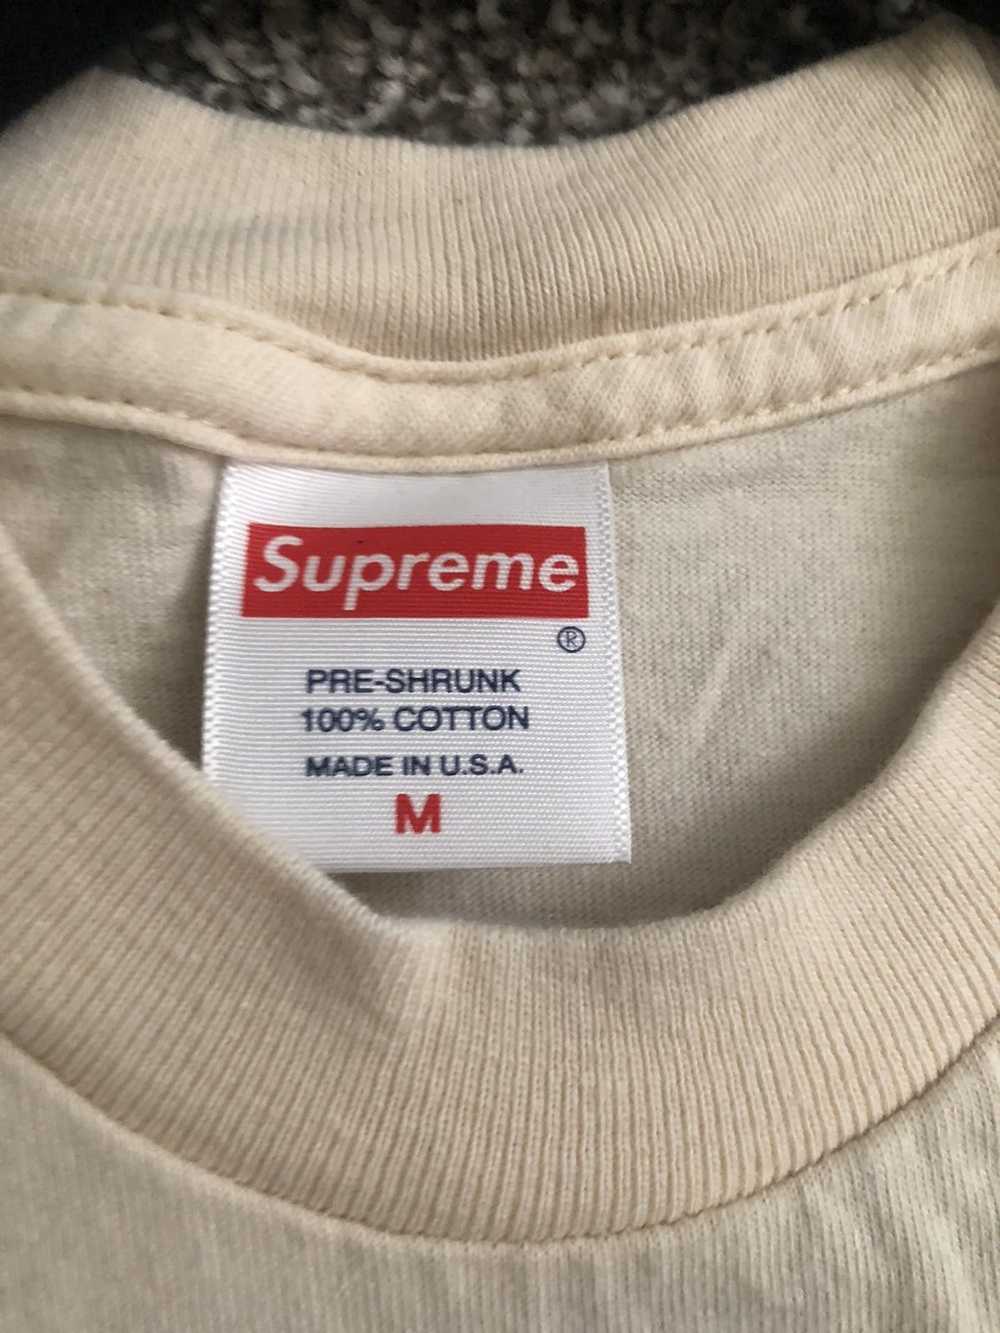 Supreme Supreme Fuck You Shirt (M) - Gem